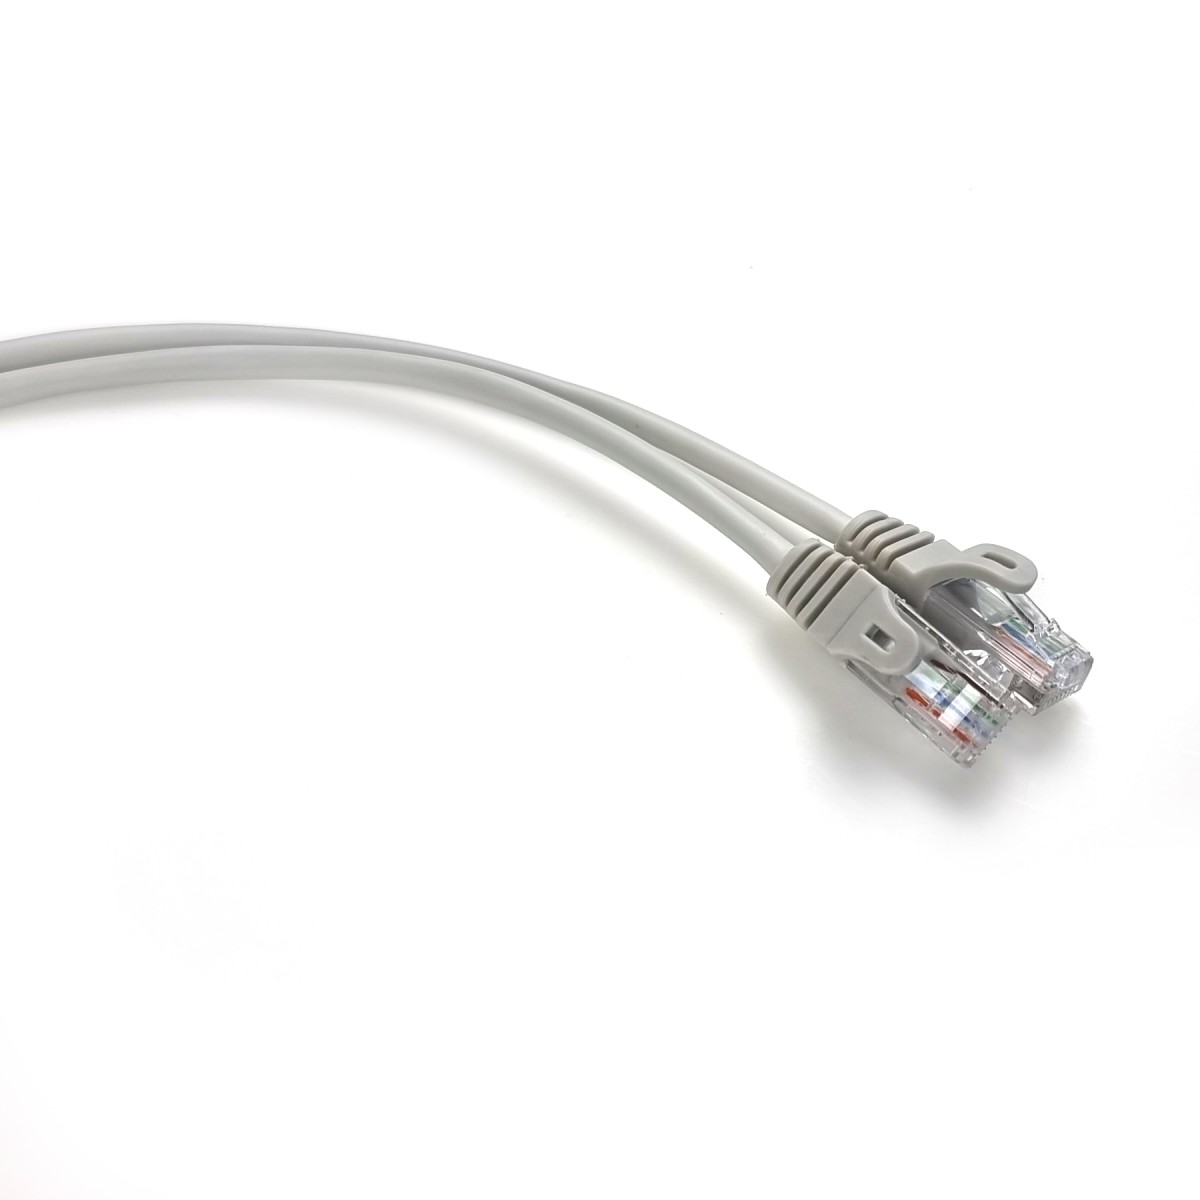 Интернет кабель 1,5м UTP литой серый RJ45 кат. 5е 98_98.jpg - фото 1